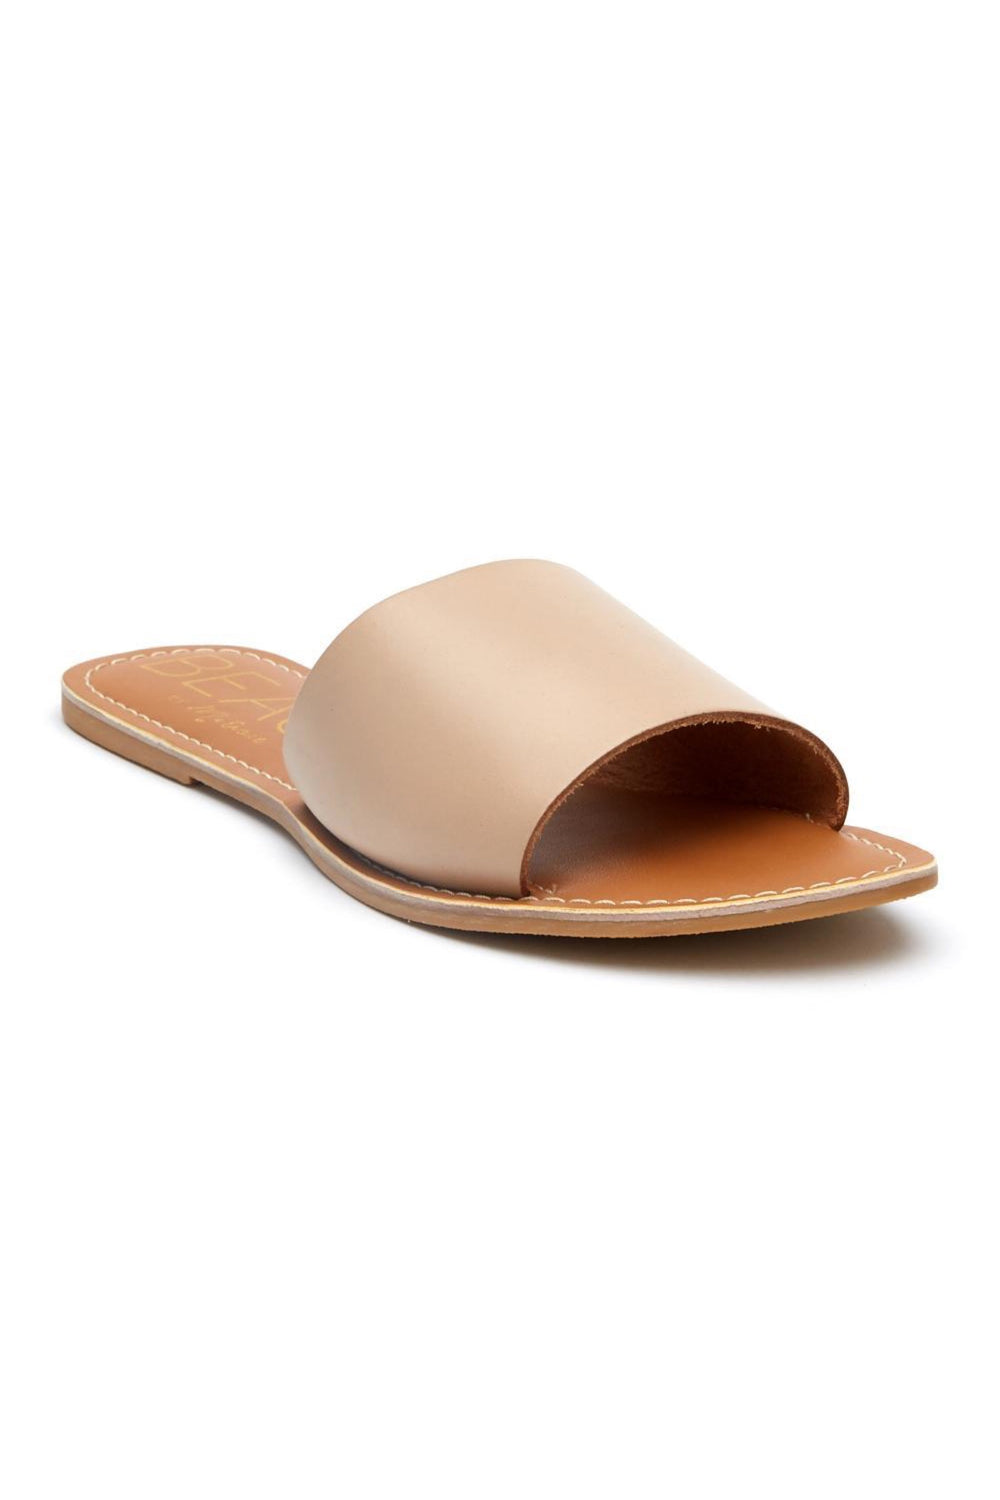 Natural Leather Cabana Sandal